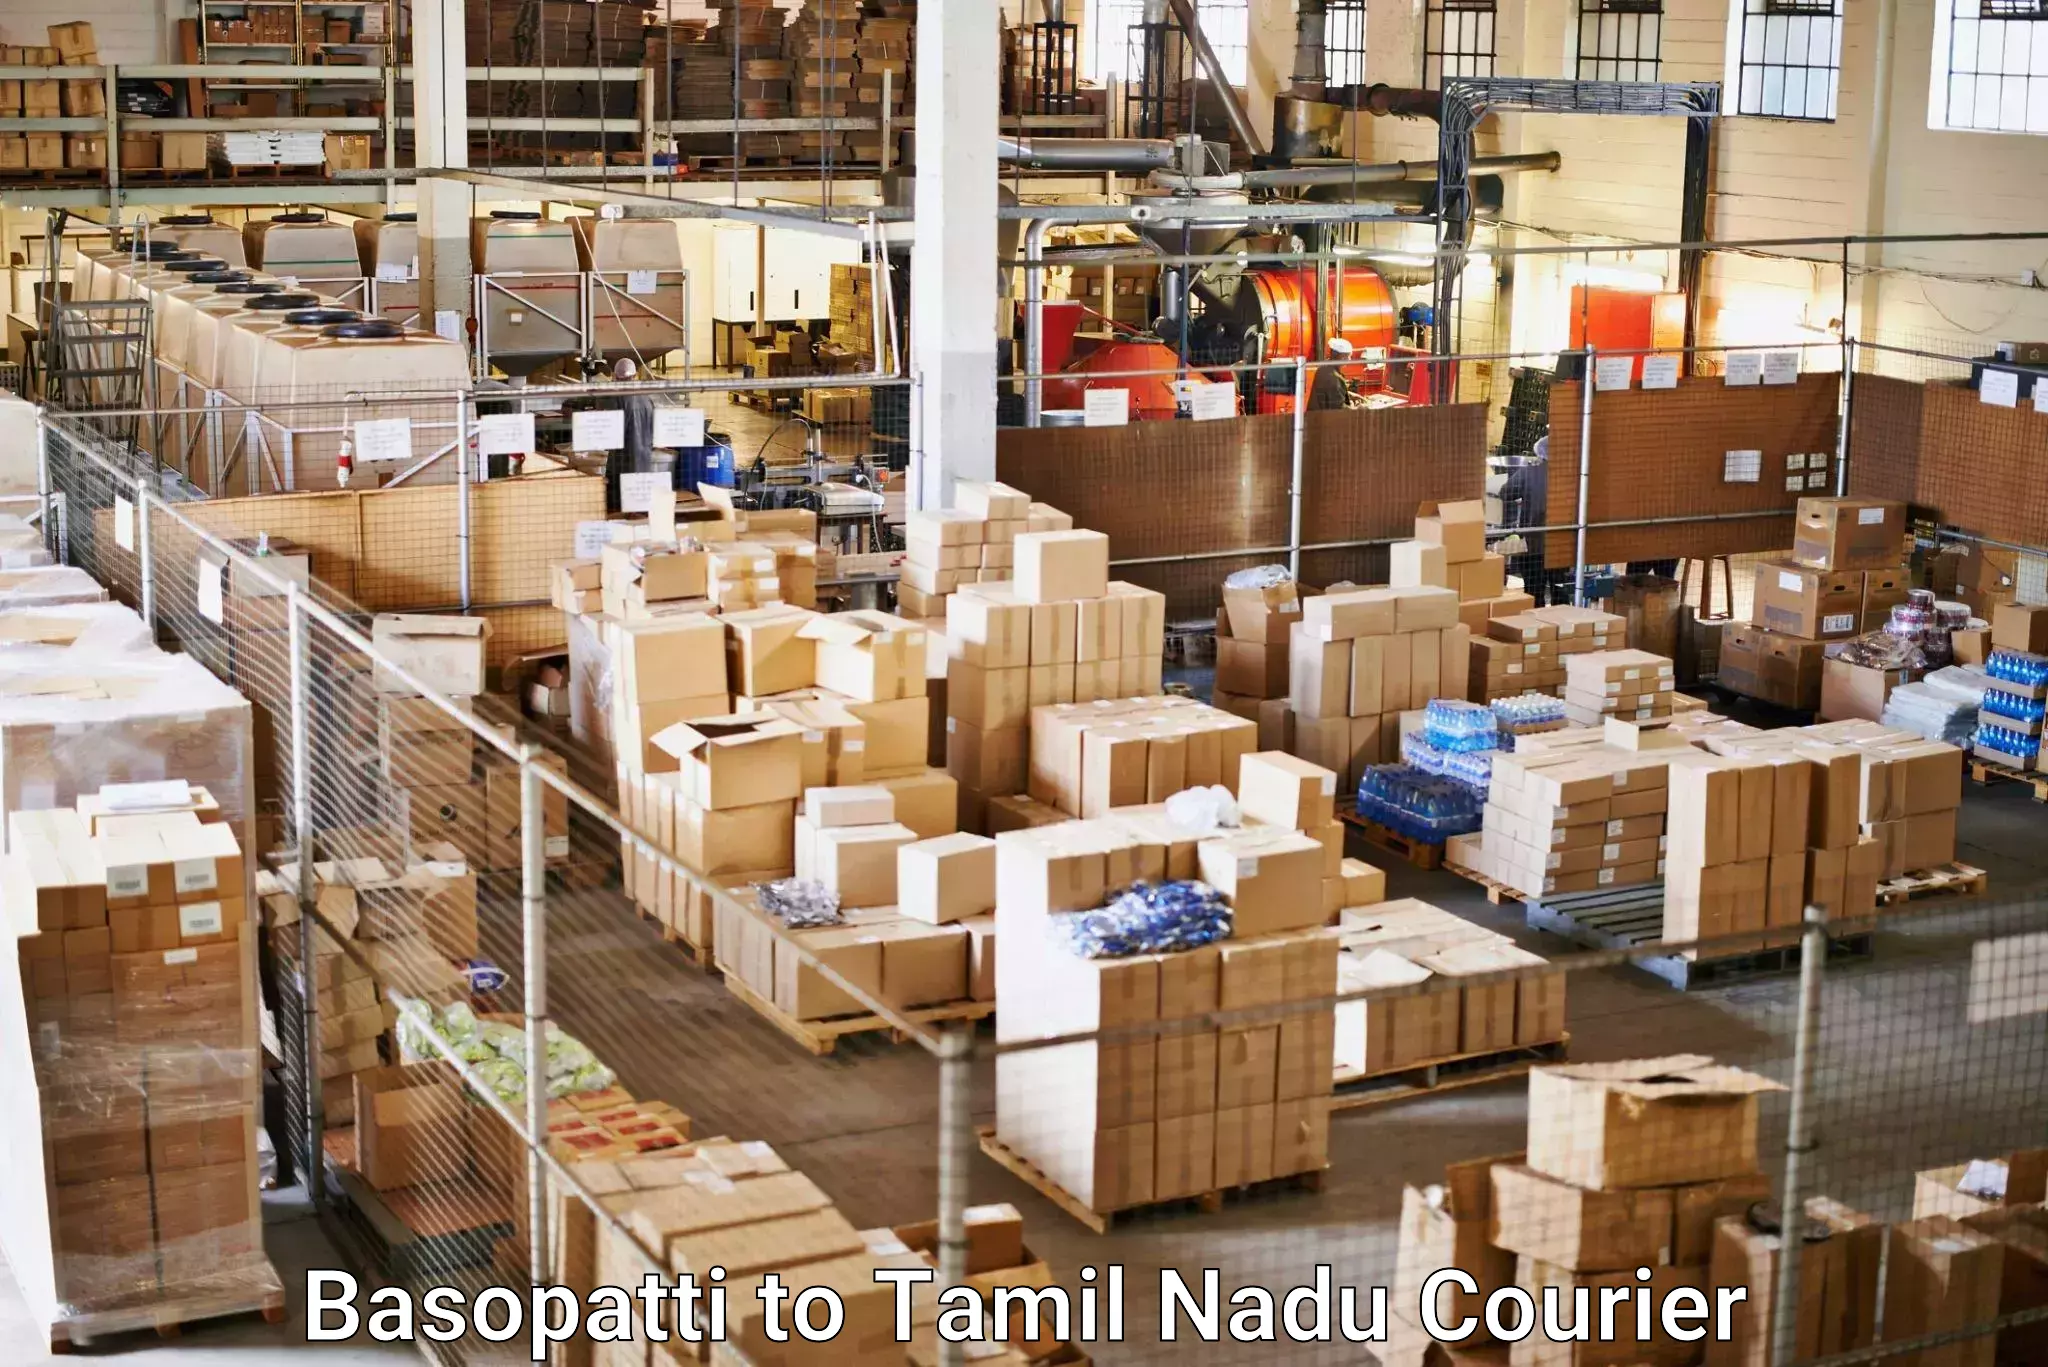 Efficient shipping operations Basopatti to Tamil Nadu Veterinary and Animal Sciences University Chennai